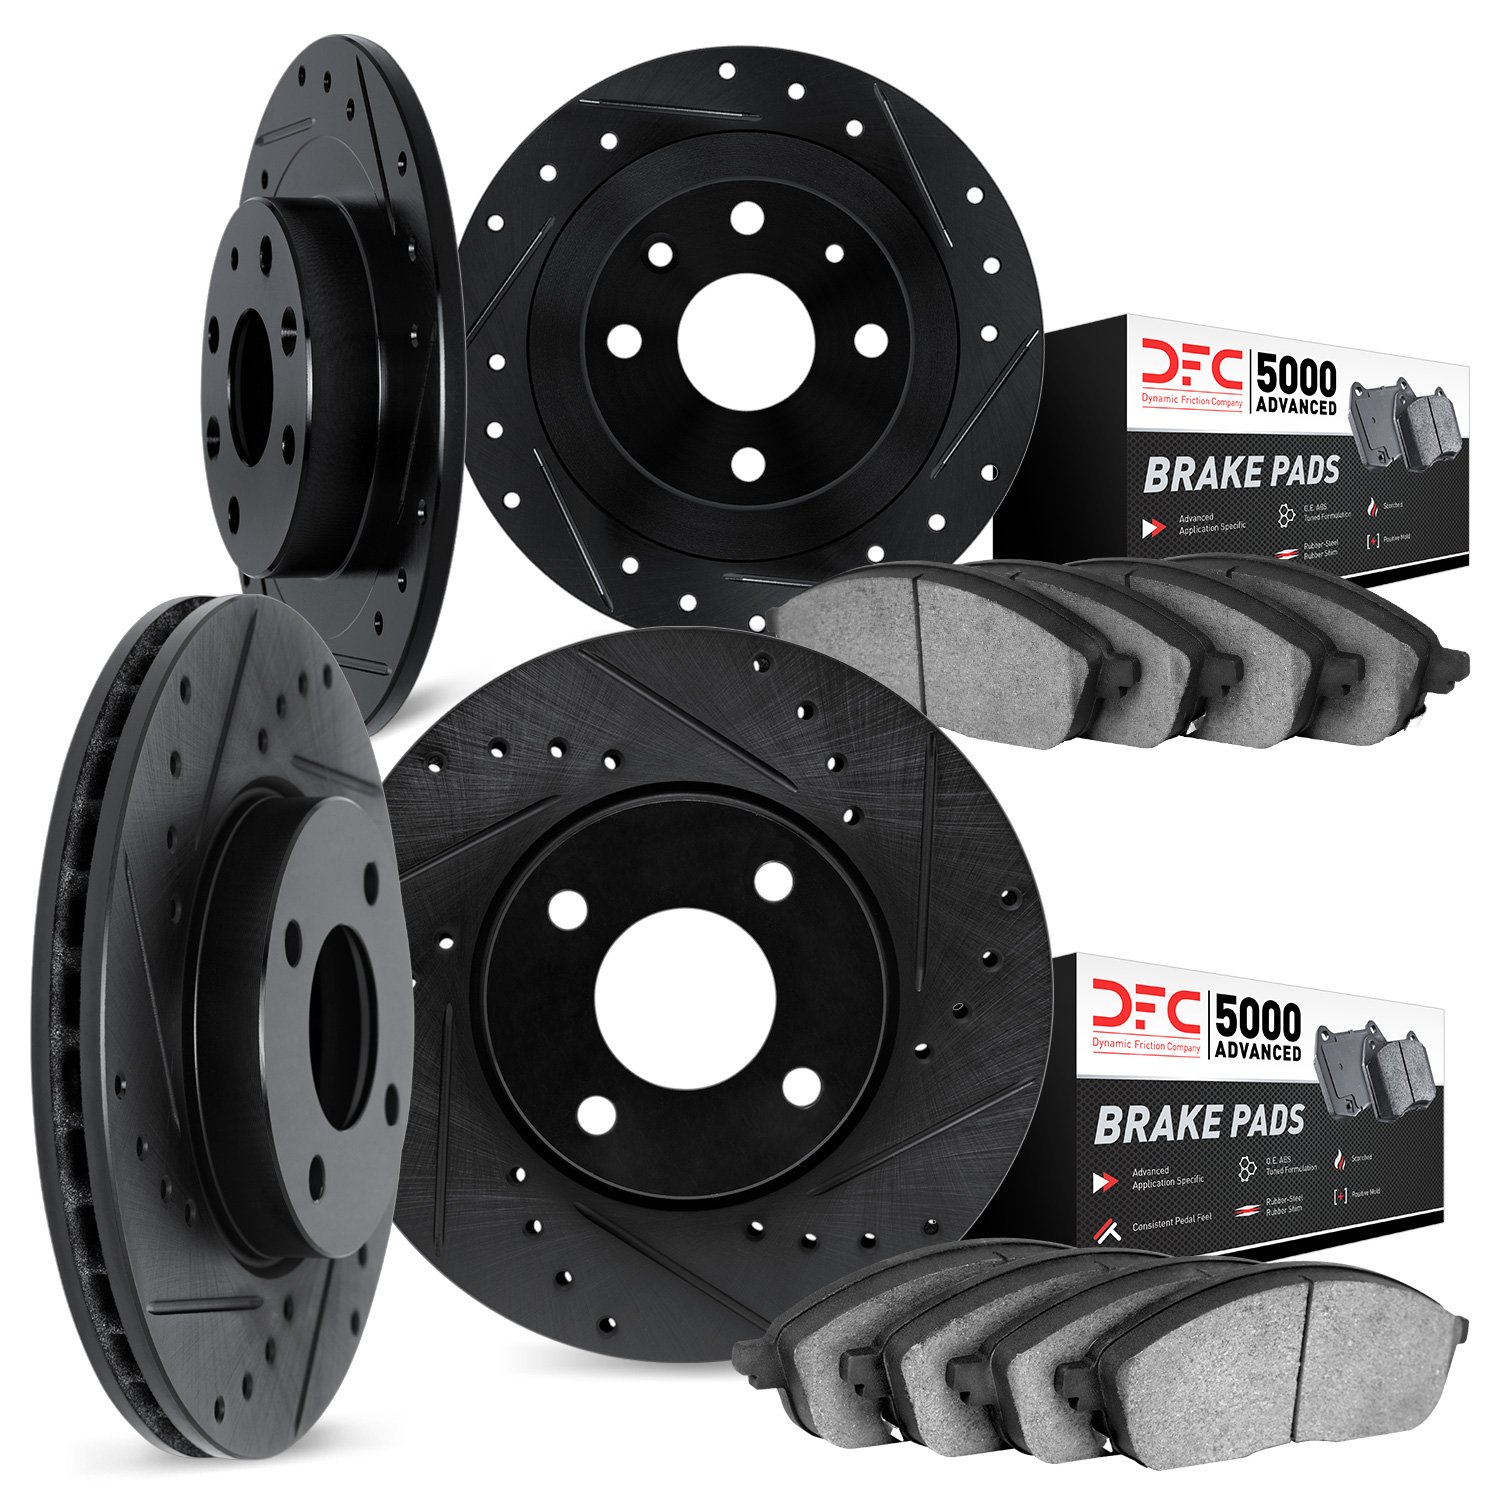 8504-01002 Drilled/Slotted Brake Rotors w/5000 Advanced Brake Pads Kit [Black], 2004-2007 Multiple Makes/Models, Position: Front